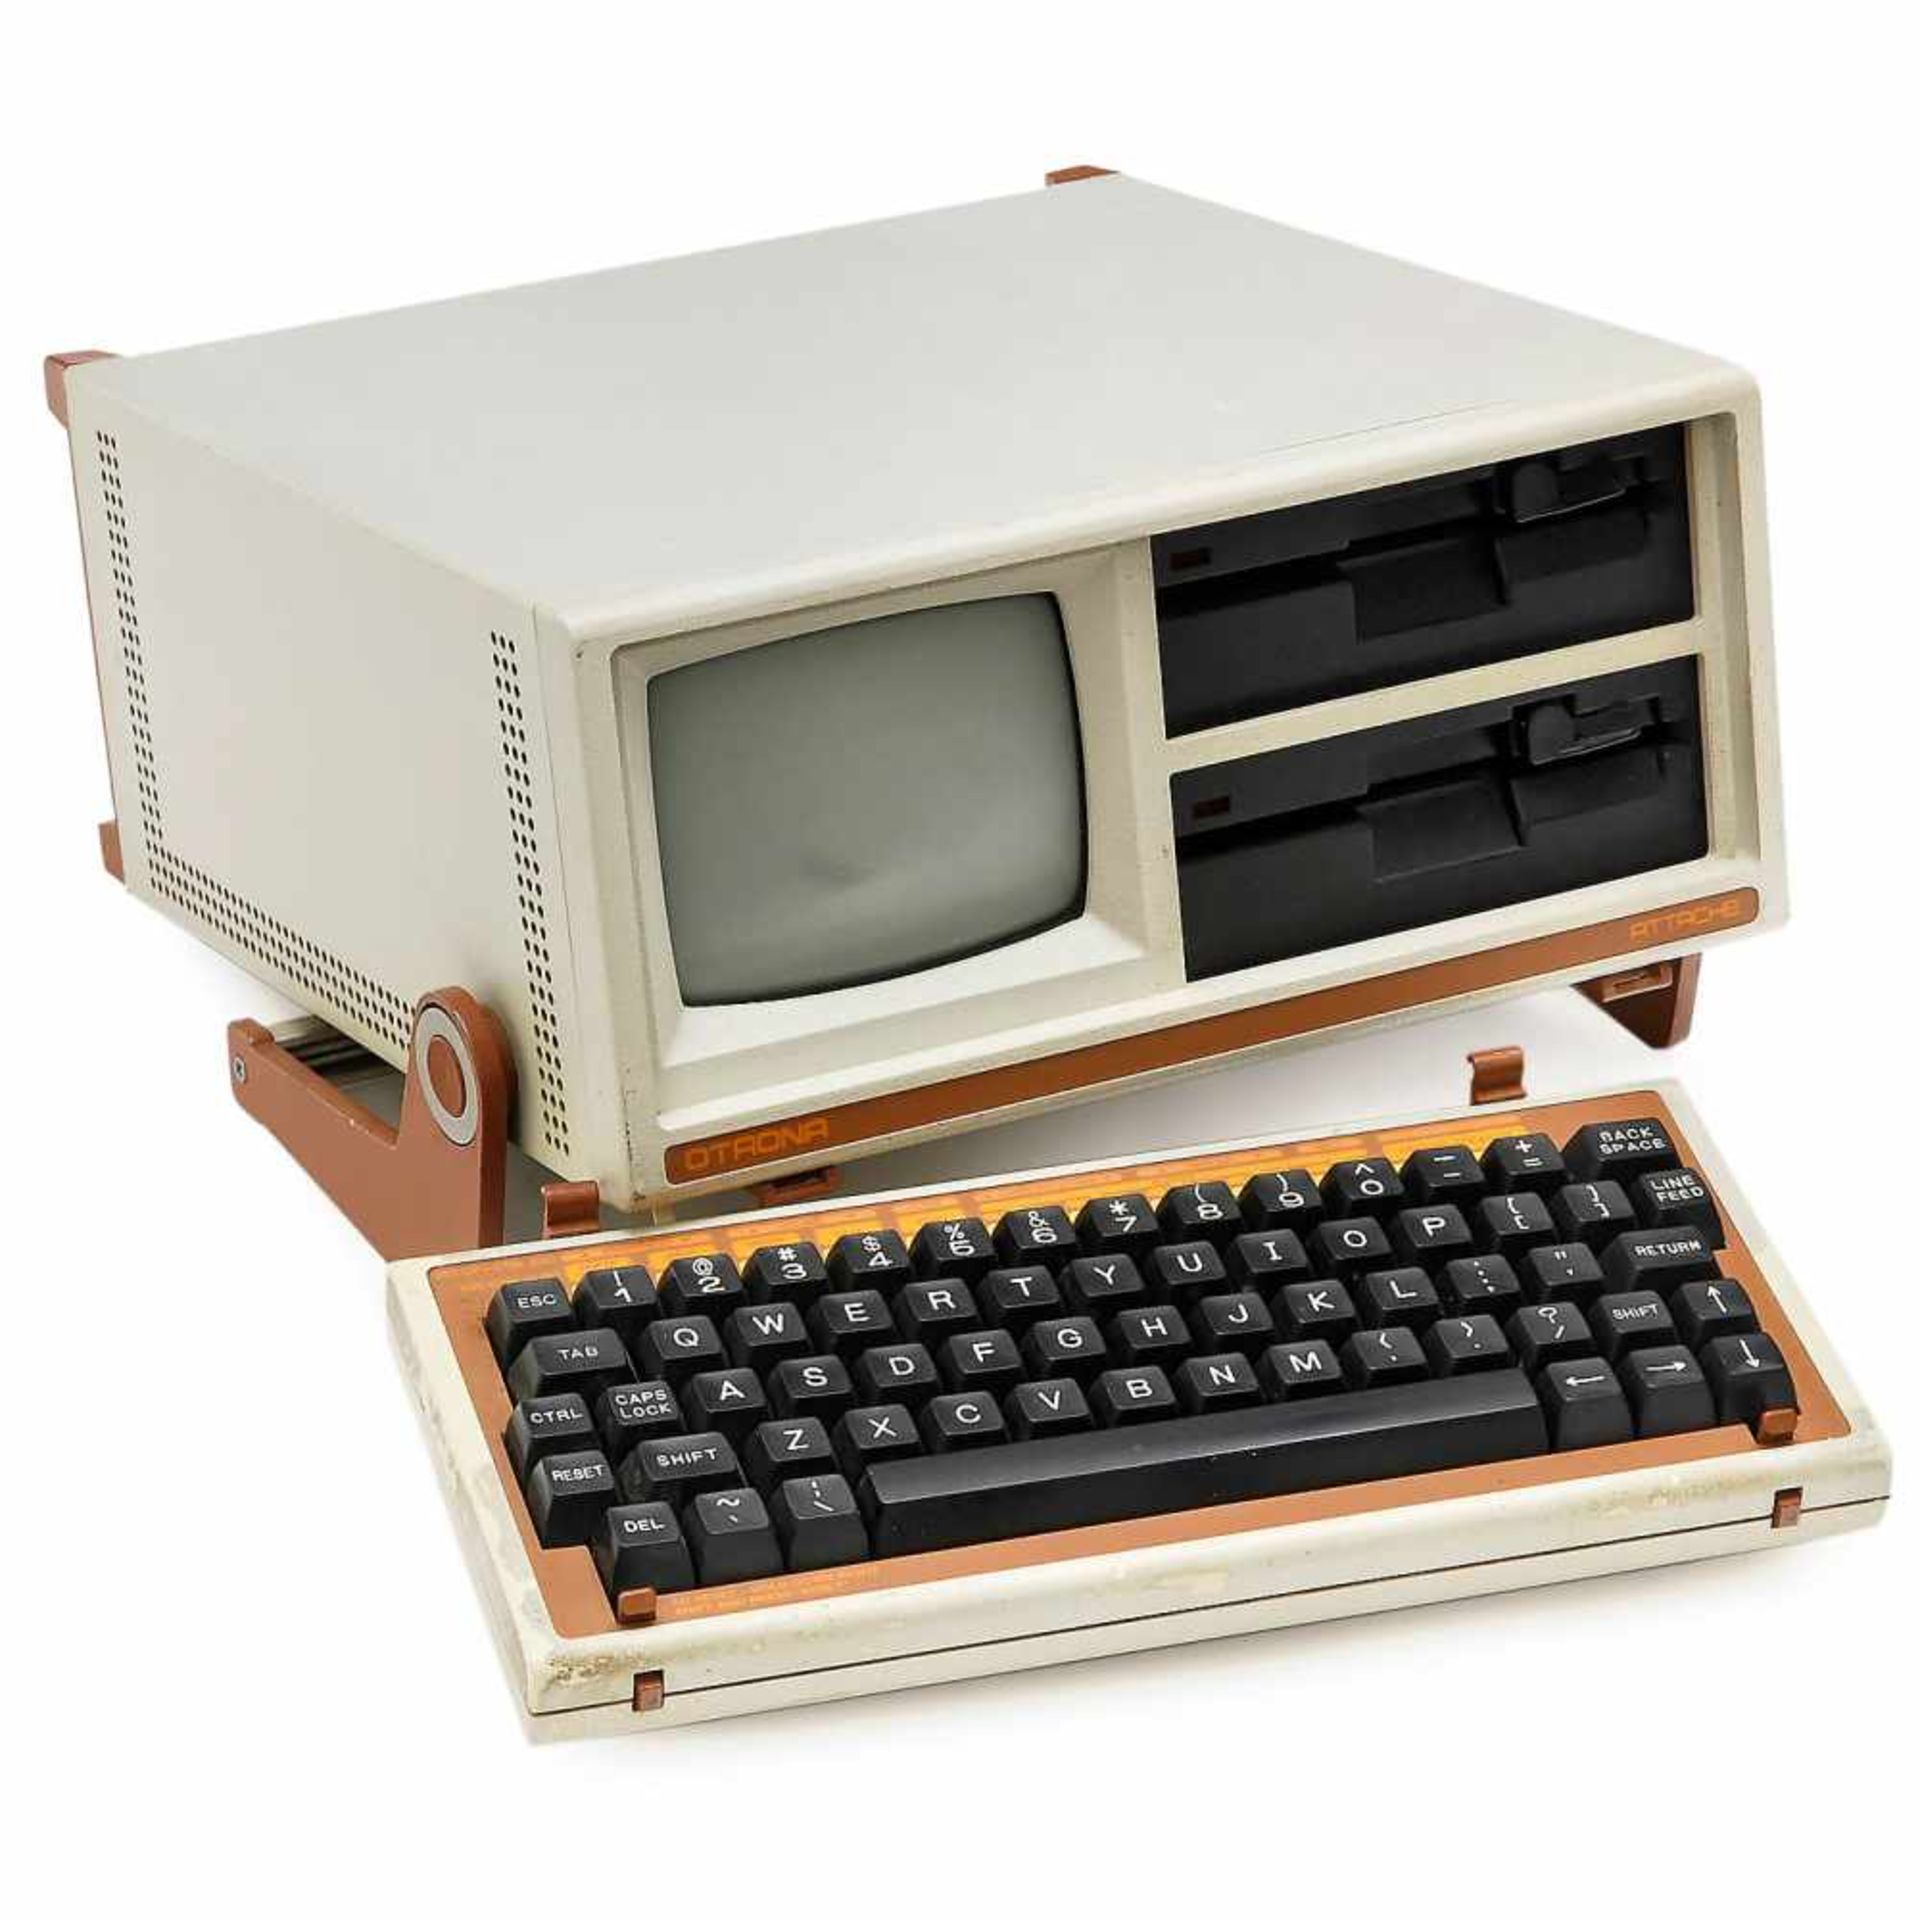 Otrona Attache Portable Personal Computer, 1982Otrona Corporation, Walnut, USA. Lightweight case